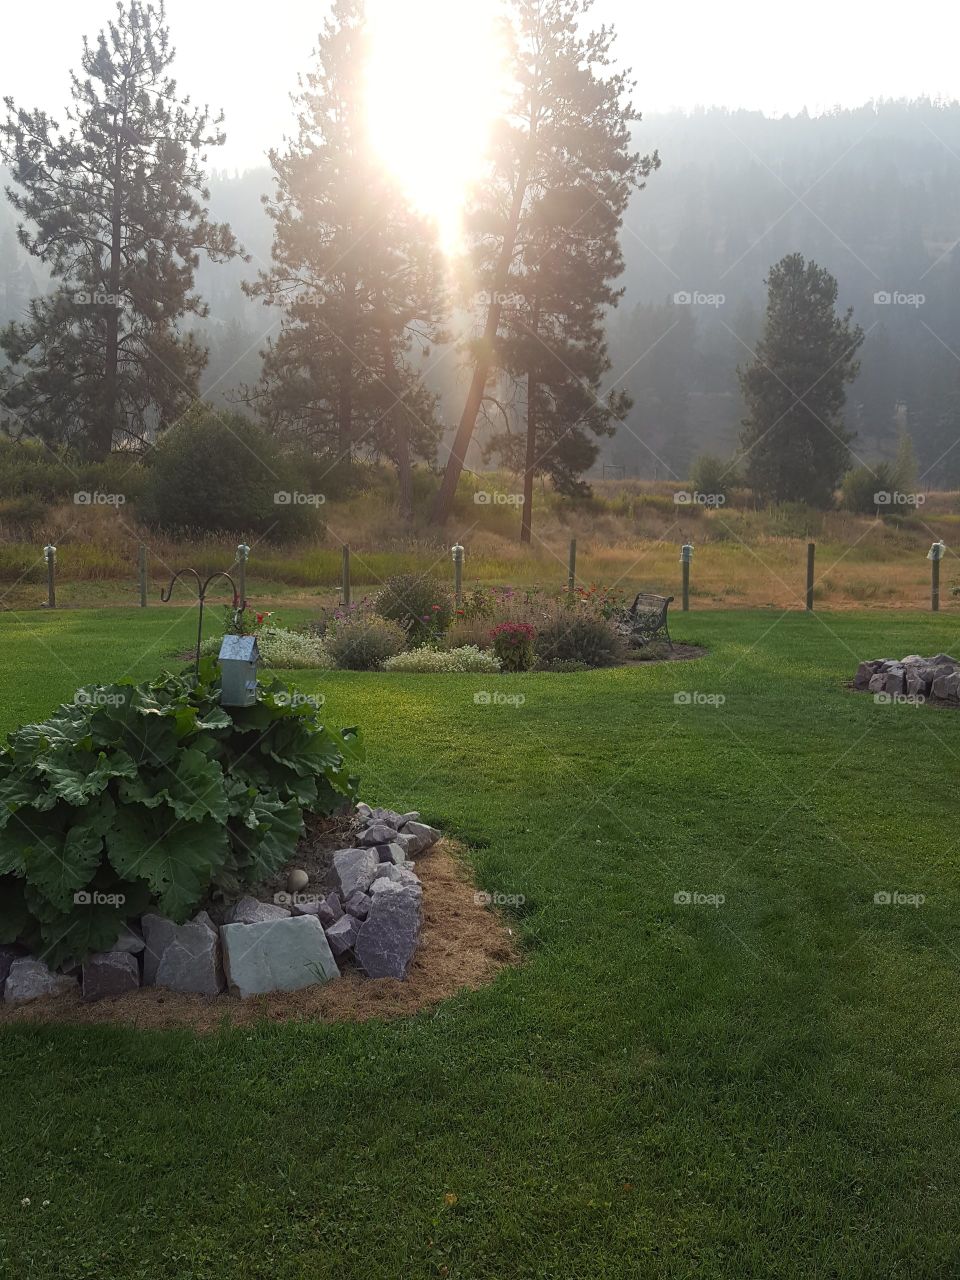 morning sun burns through the fog to illuminate the grass and gardens between the trees,  beautiful Montana sunset morning